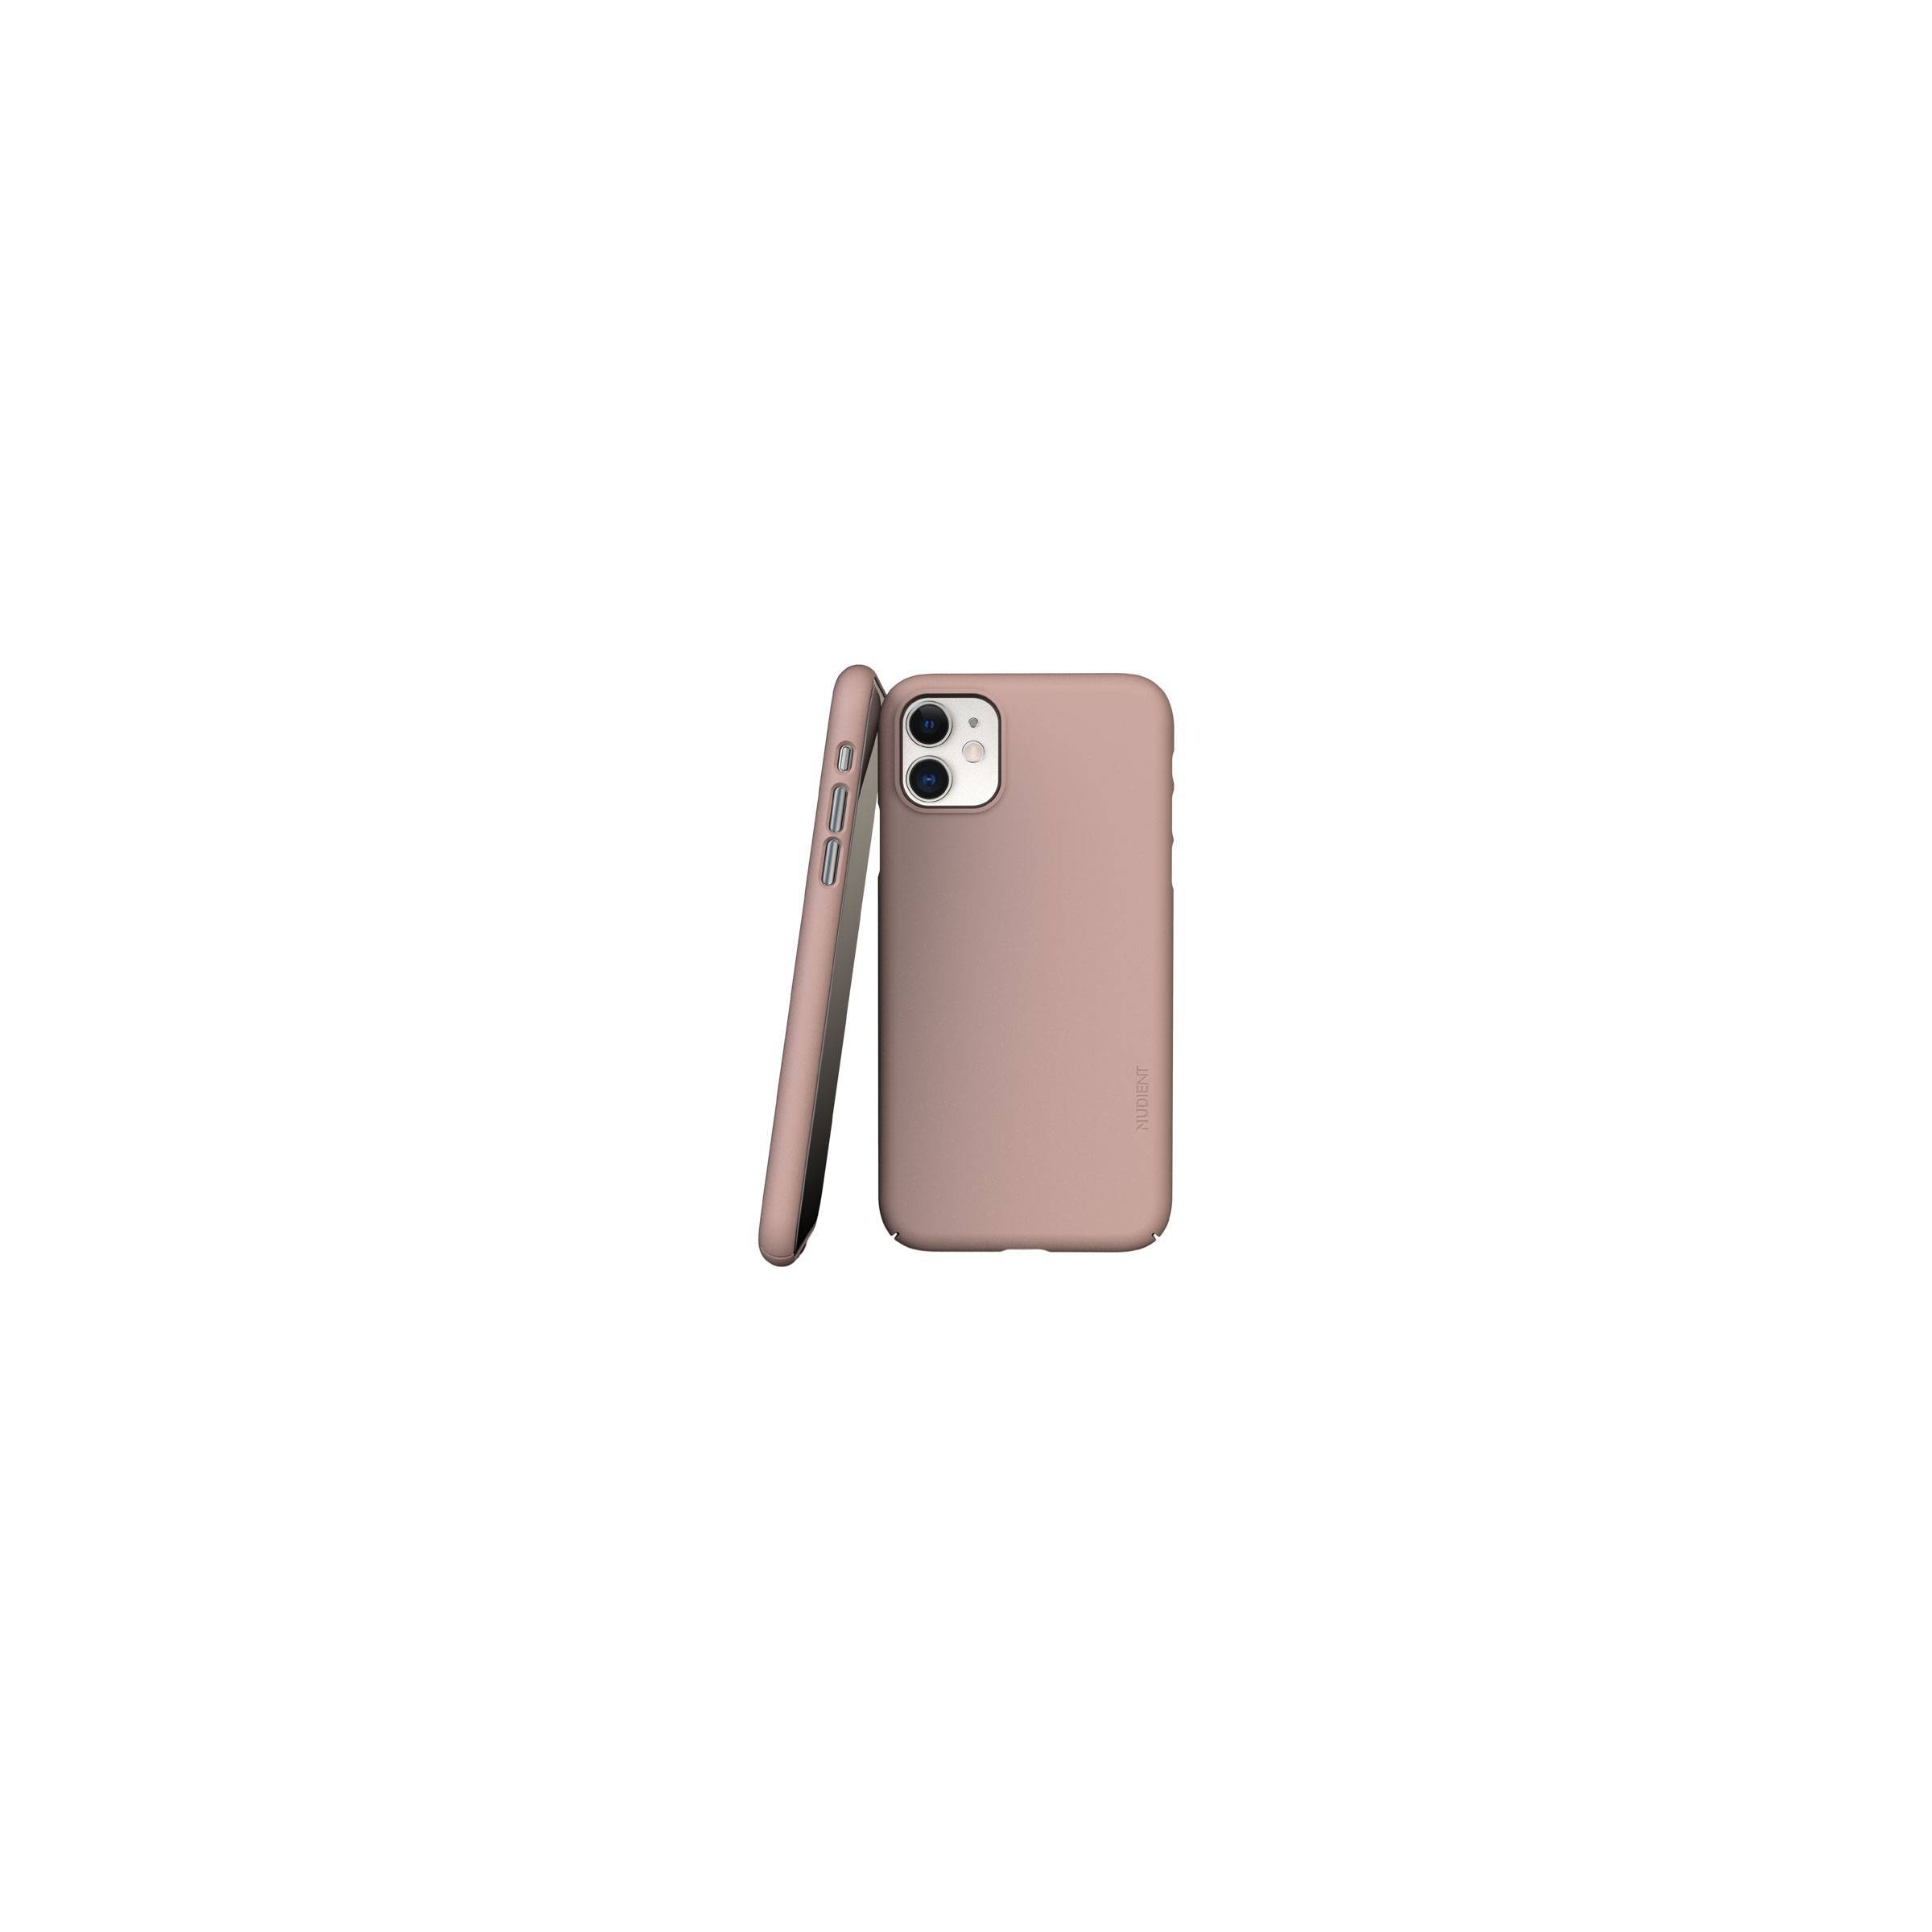 Bilde av Nudient Thin Precise V3 Iphone 11 Cover, Dusty Pink